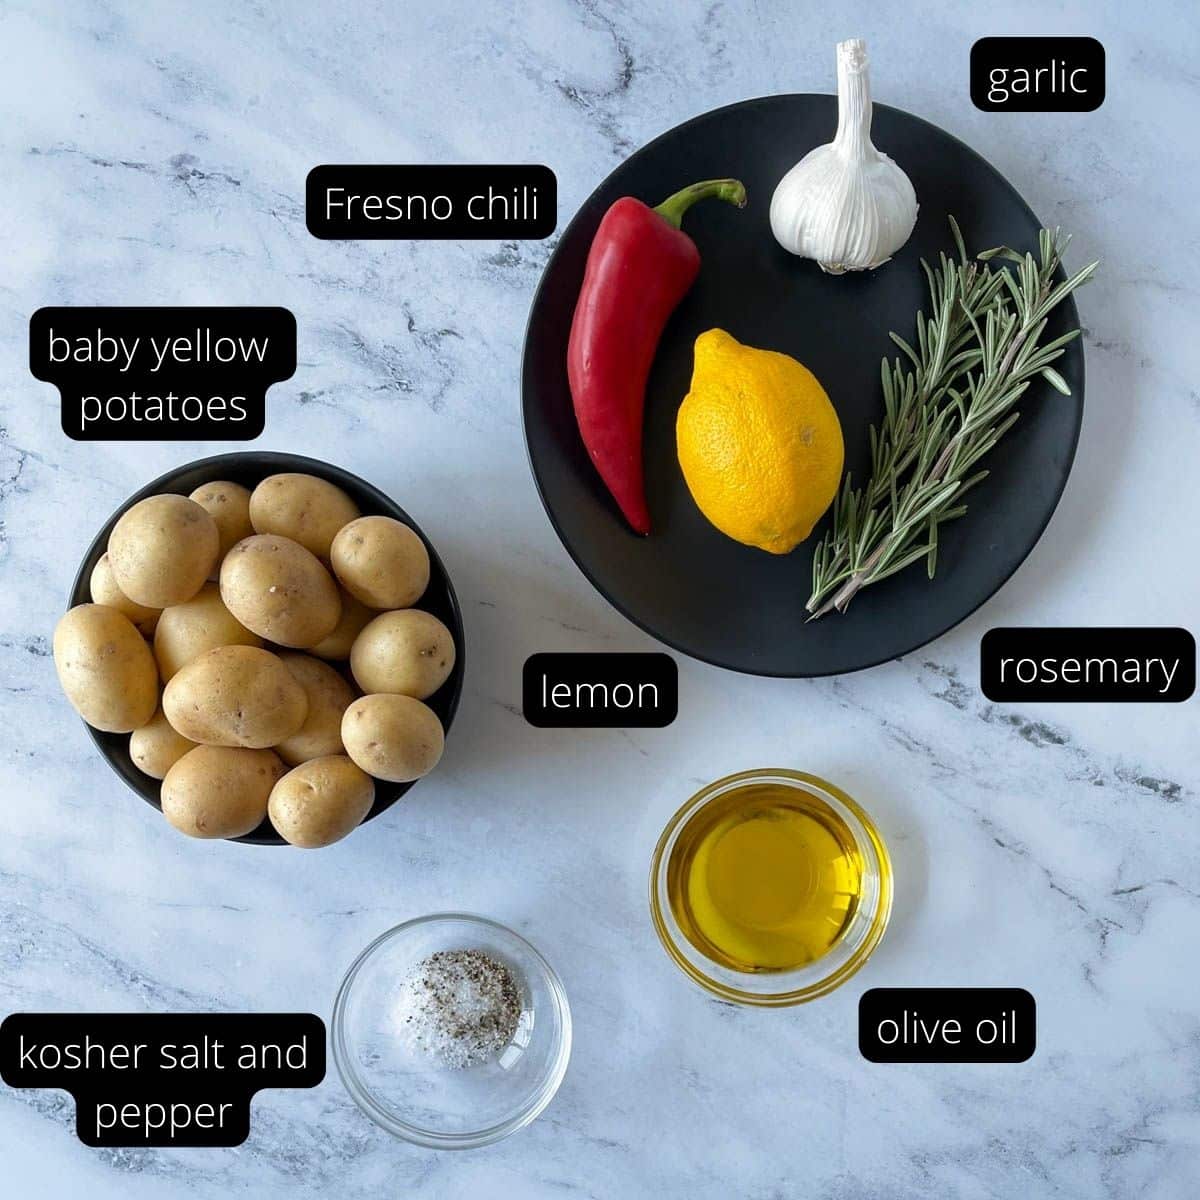 Overhead shot showing labeled ingredients: potatoes, salt, pepper, olive oil, rosemary, garlic, lemon, and fresno chili.